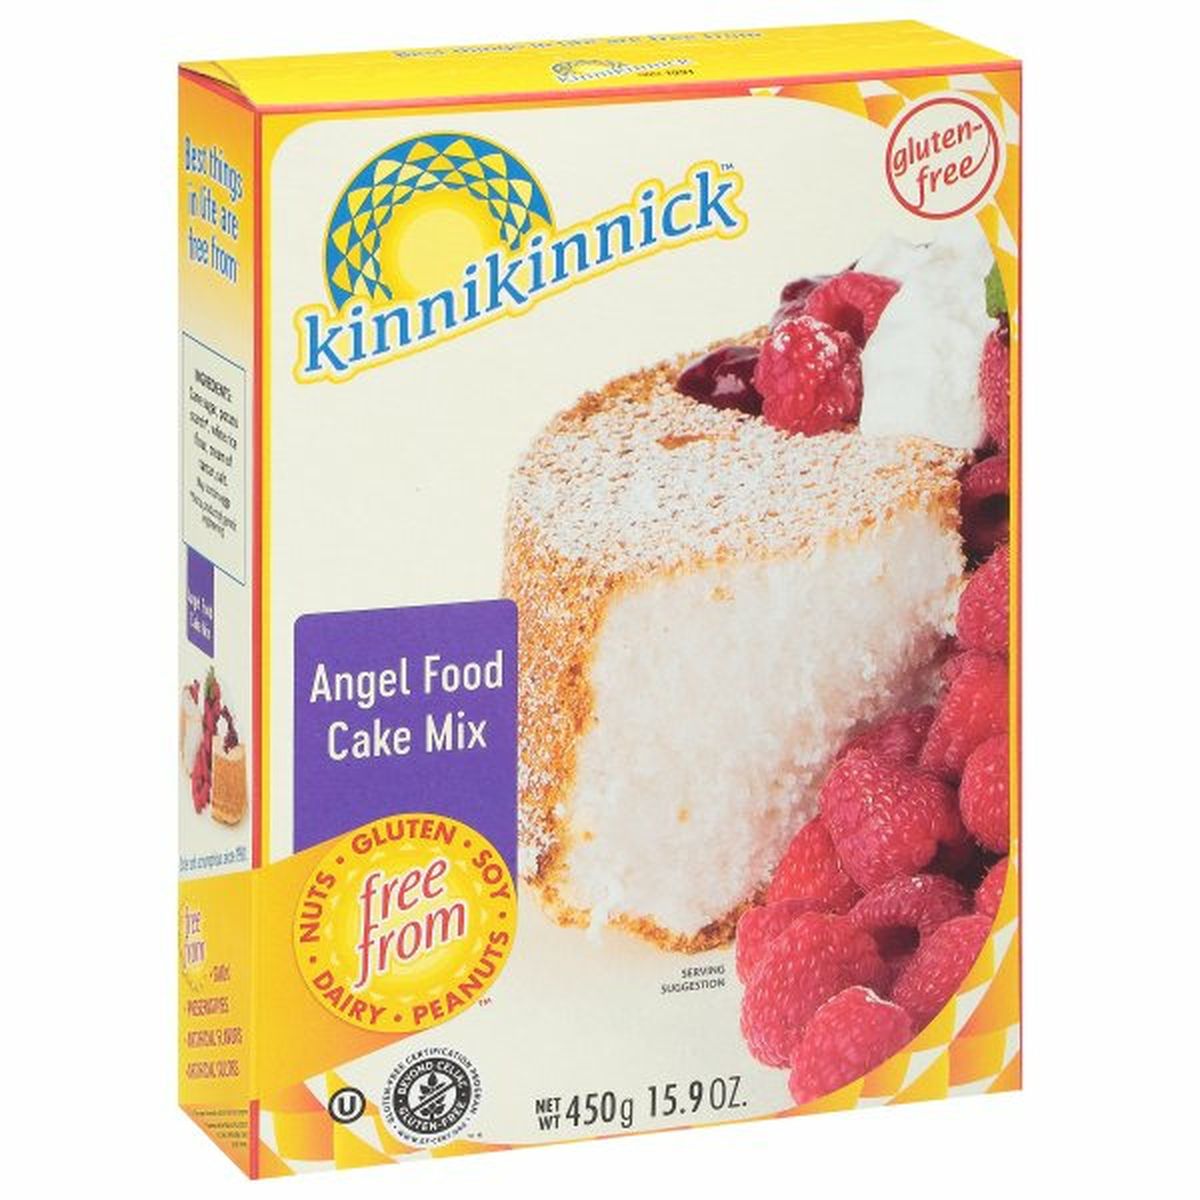 Calories in Kinnikinnick Cake Mix, Gluten Free, Angel Food